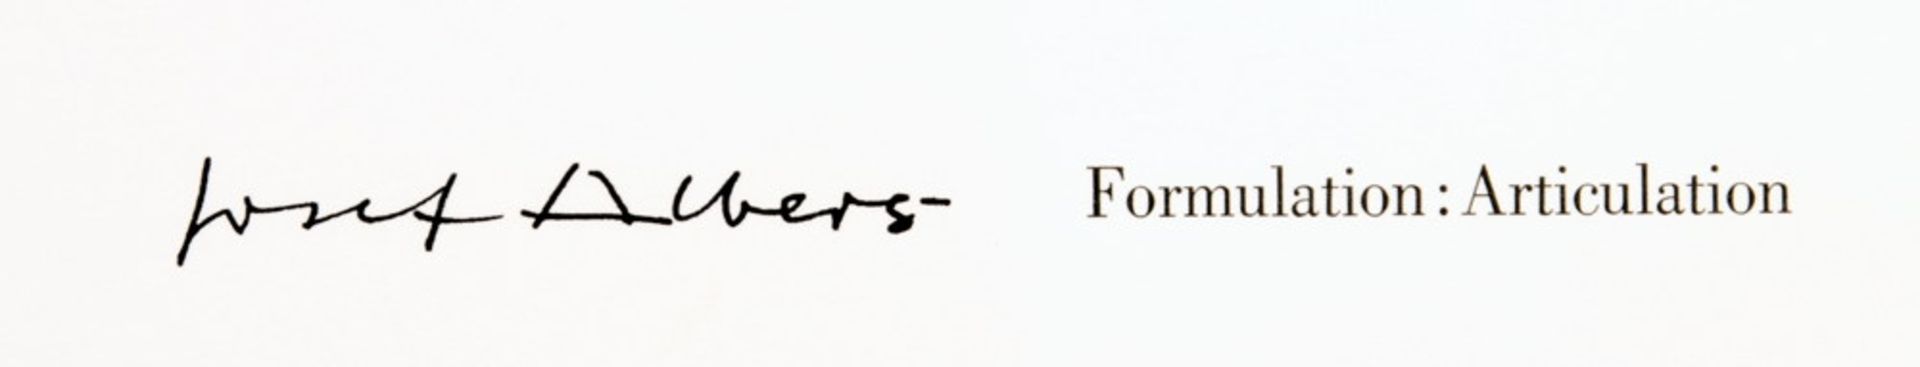 Josef Albers. Formulation : Articulation I / II. - Image 2 of 7